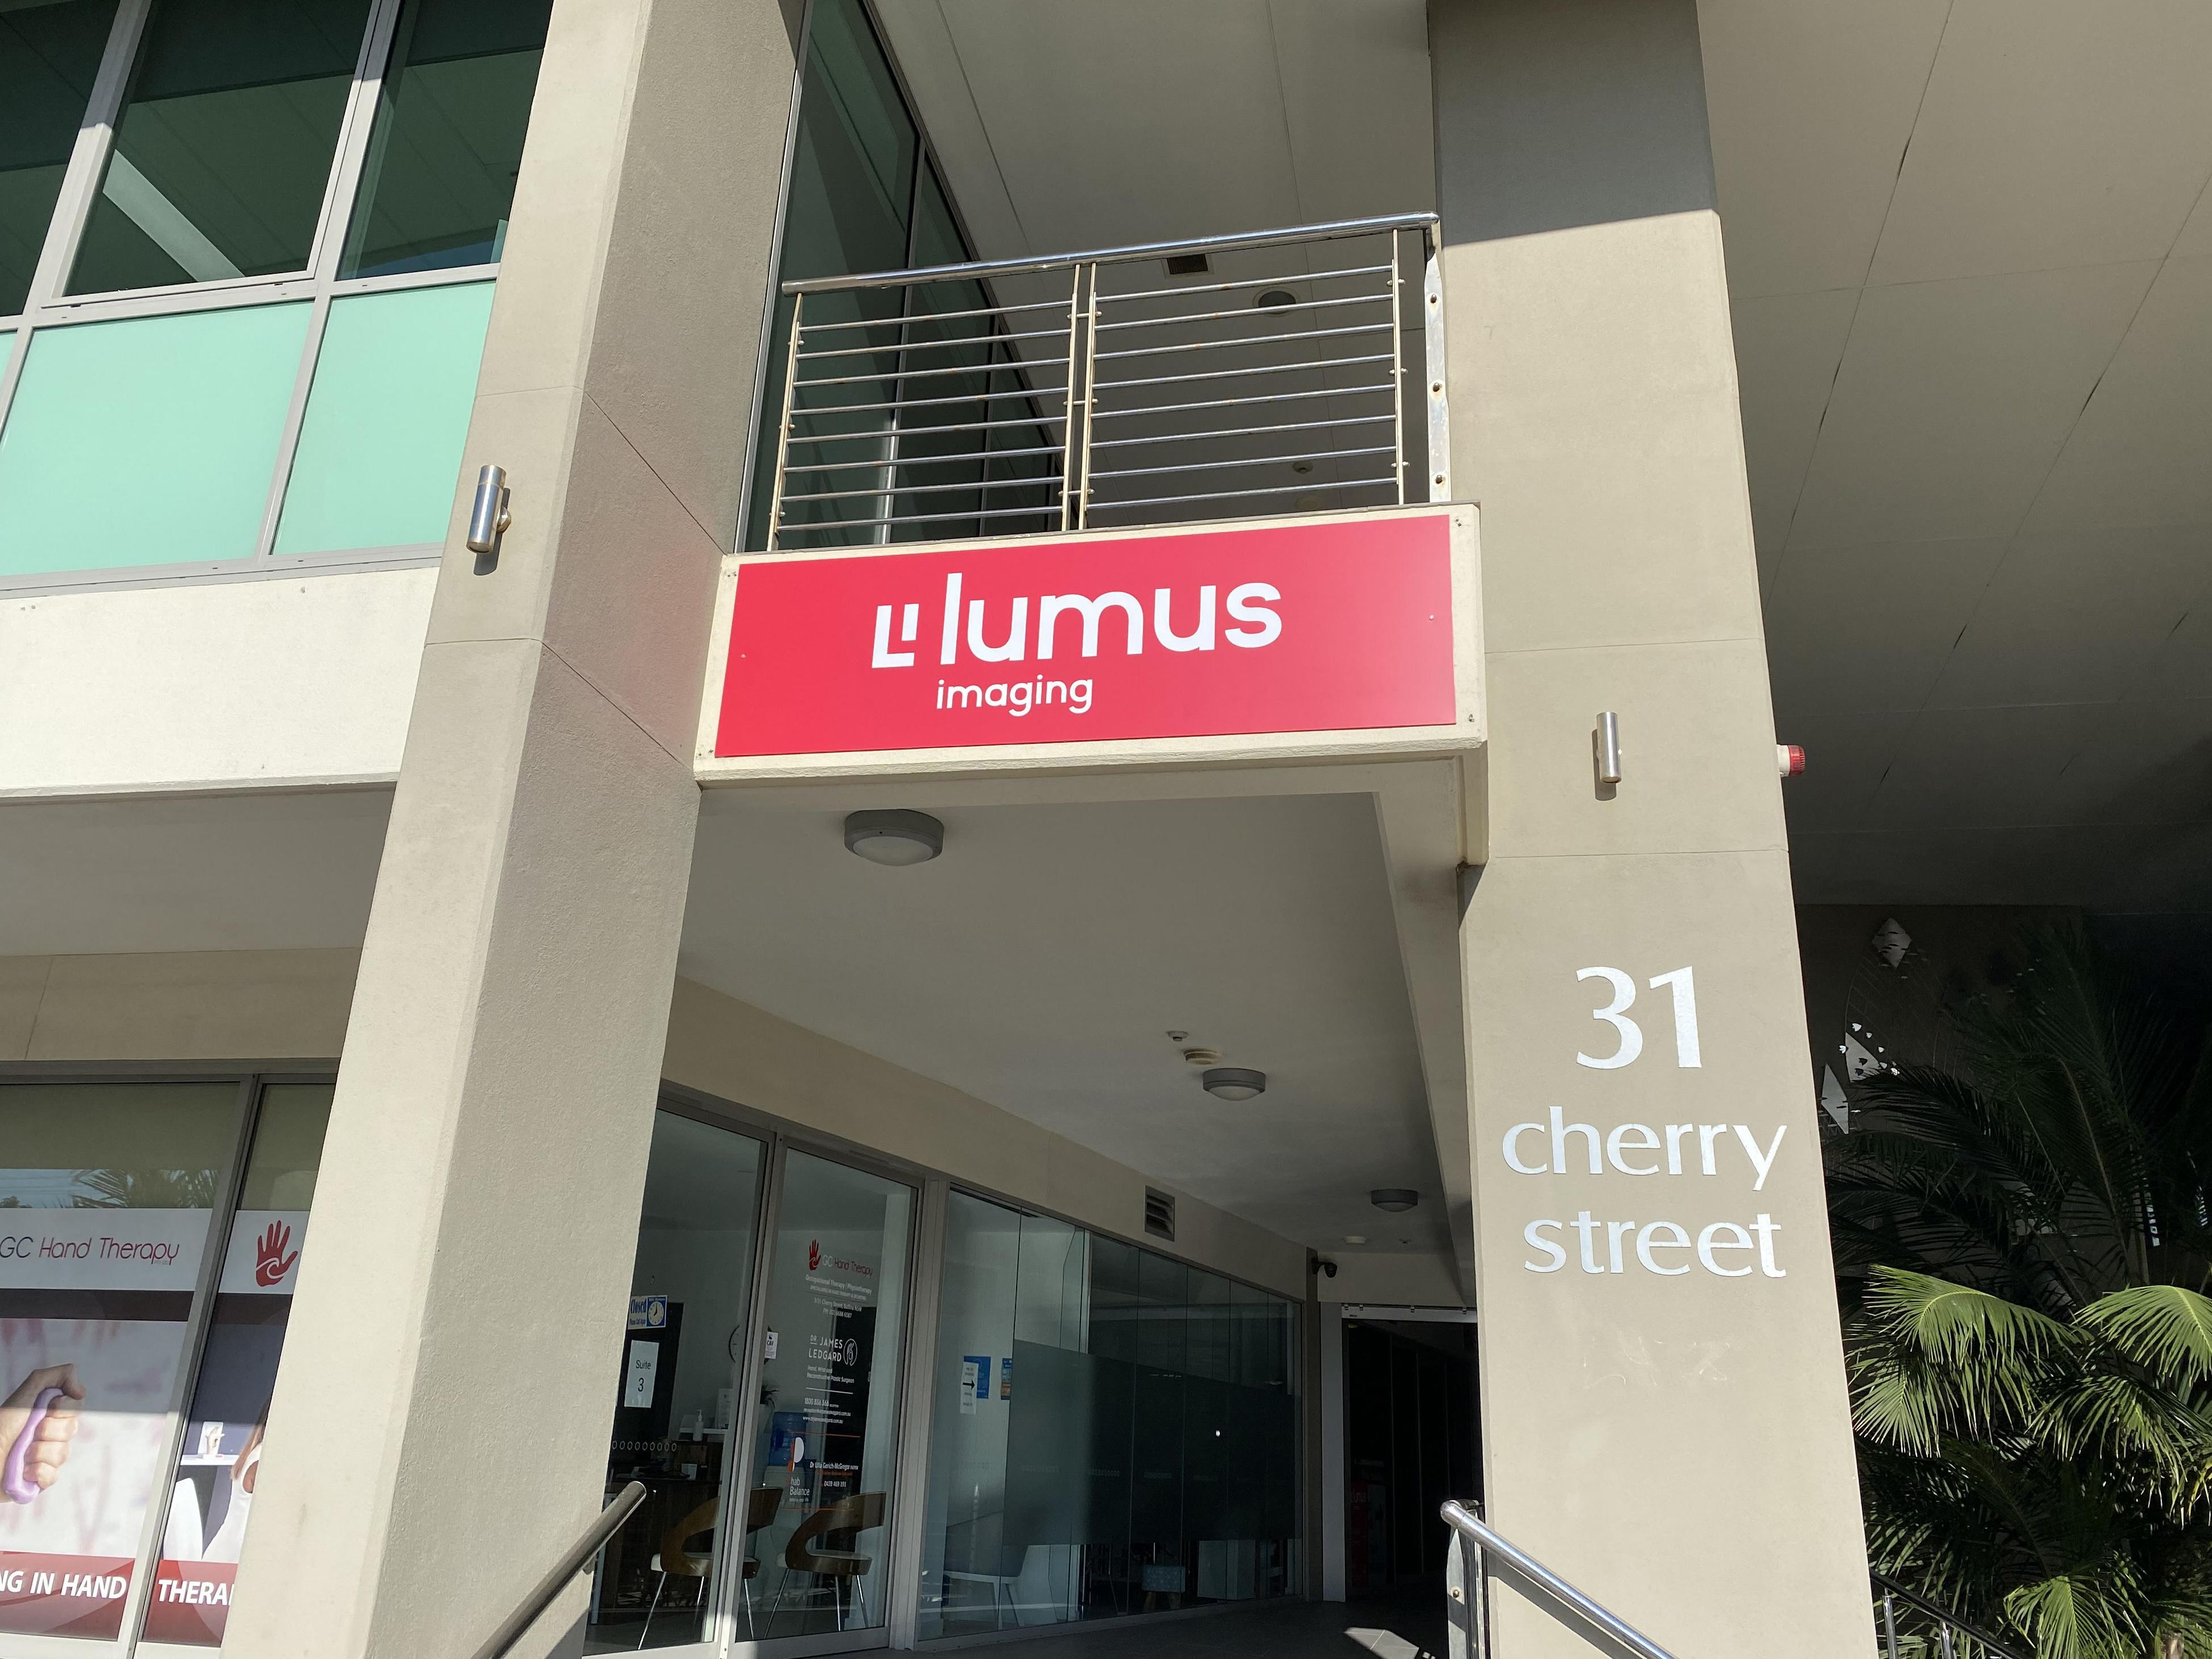 Lumus building entrance sign